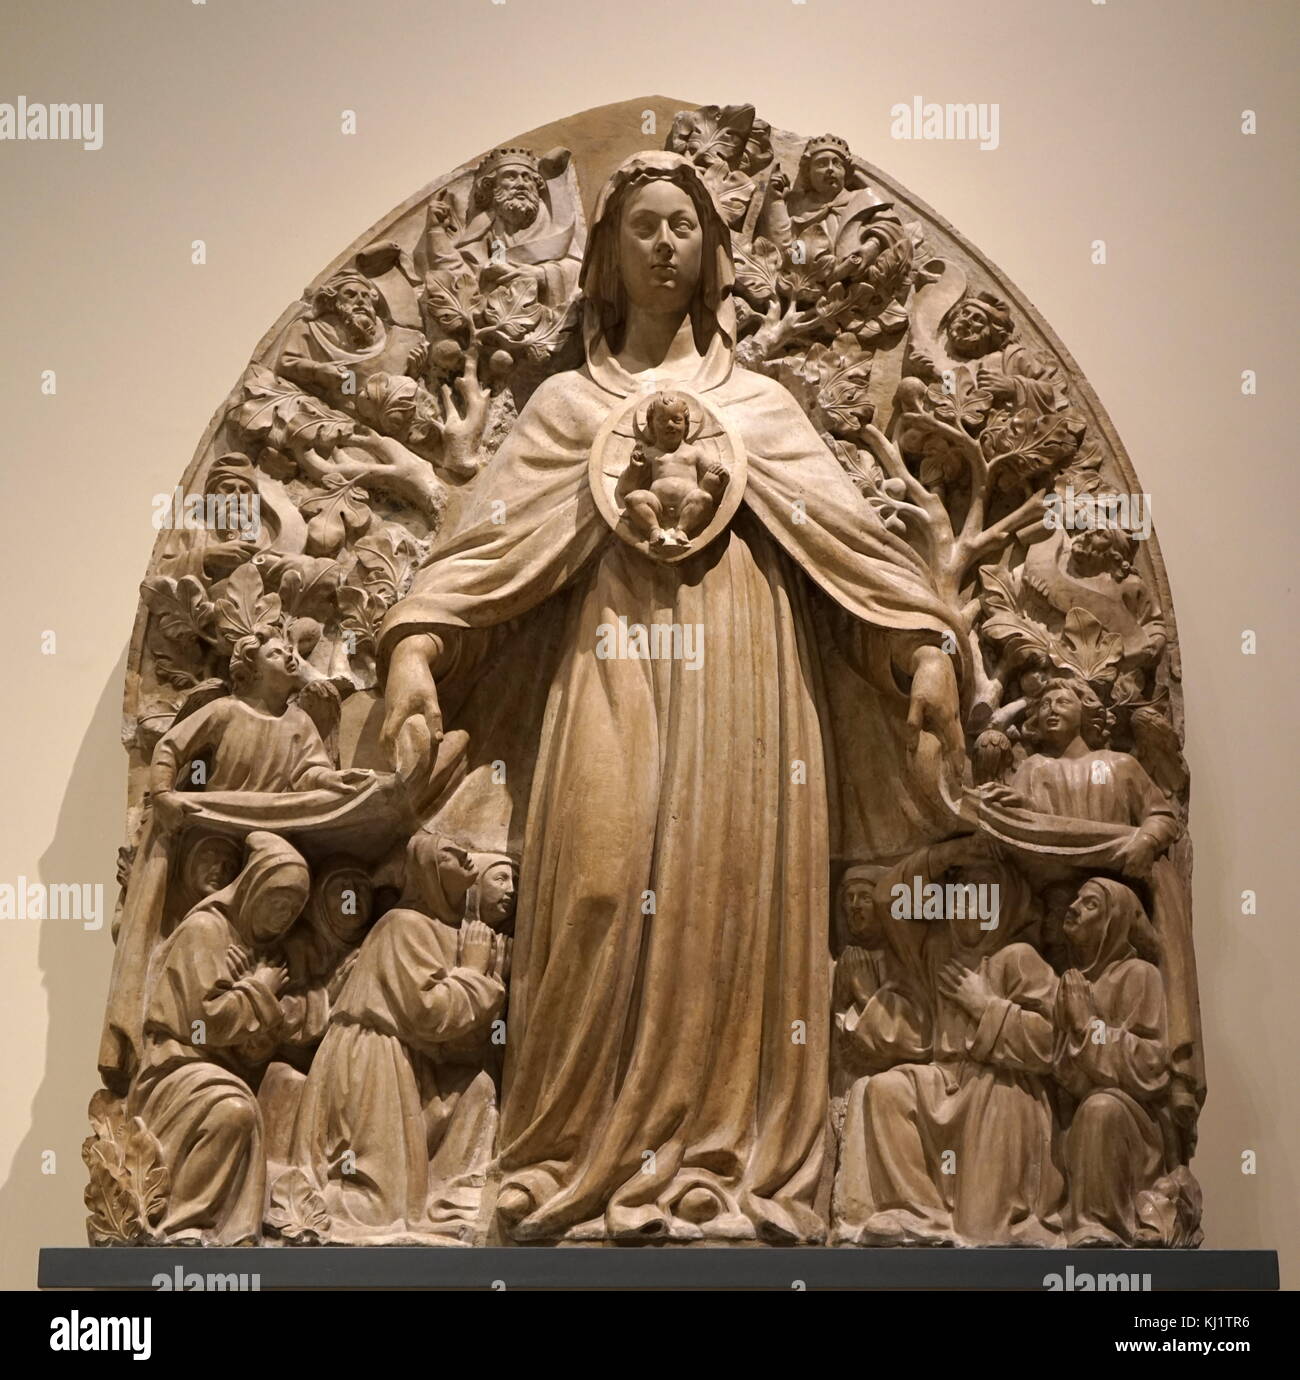 La escultura de la Virgen de la misericordia por Bartolomeo Bon (1407-1464), escultor y arquitecto italiano. Fecha del siglo XV. Foto de stock